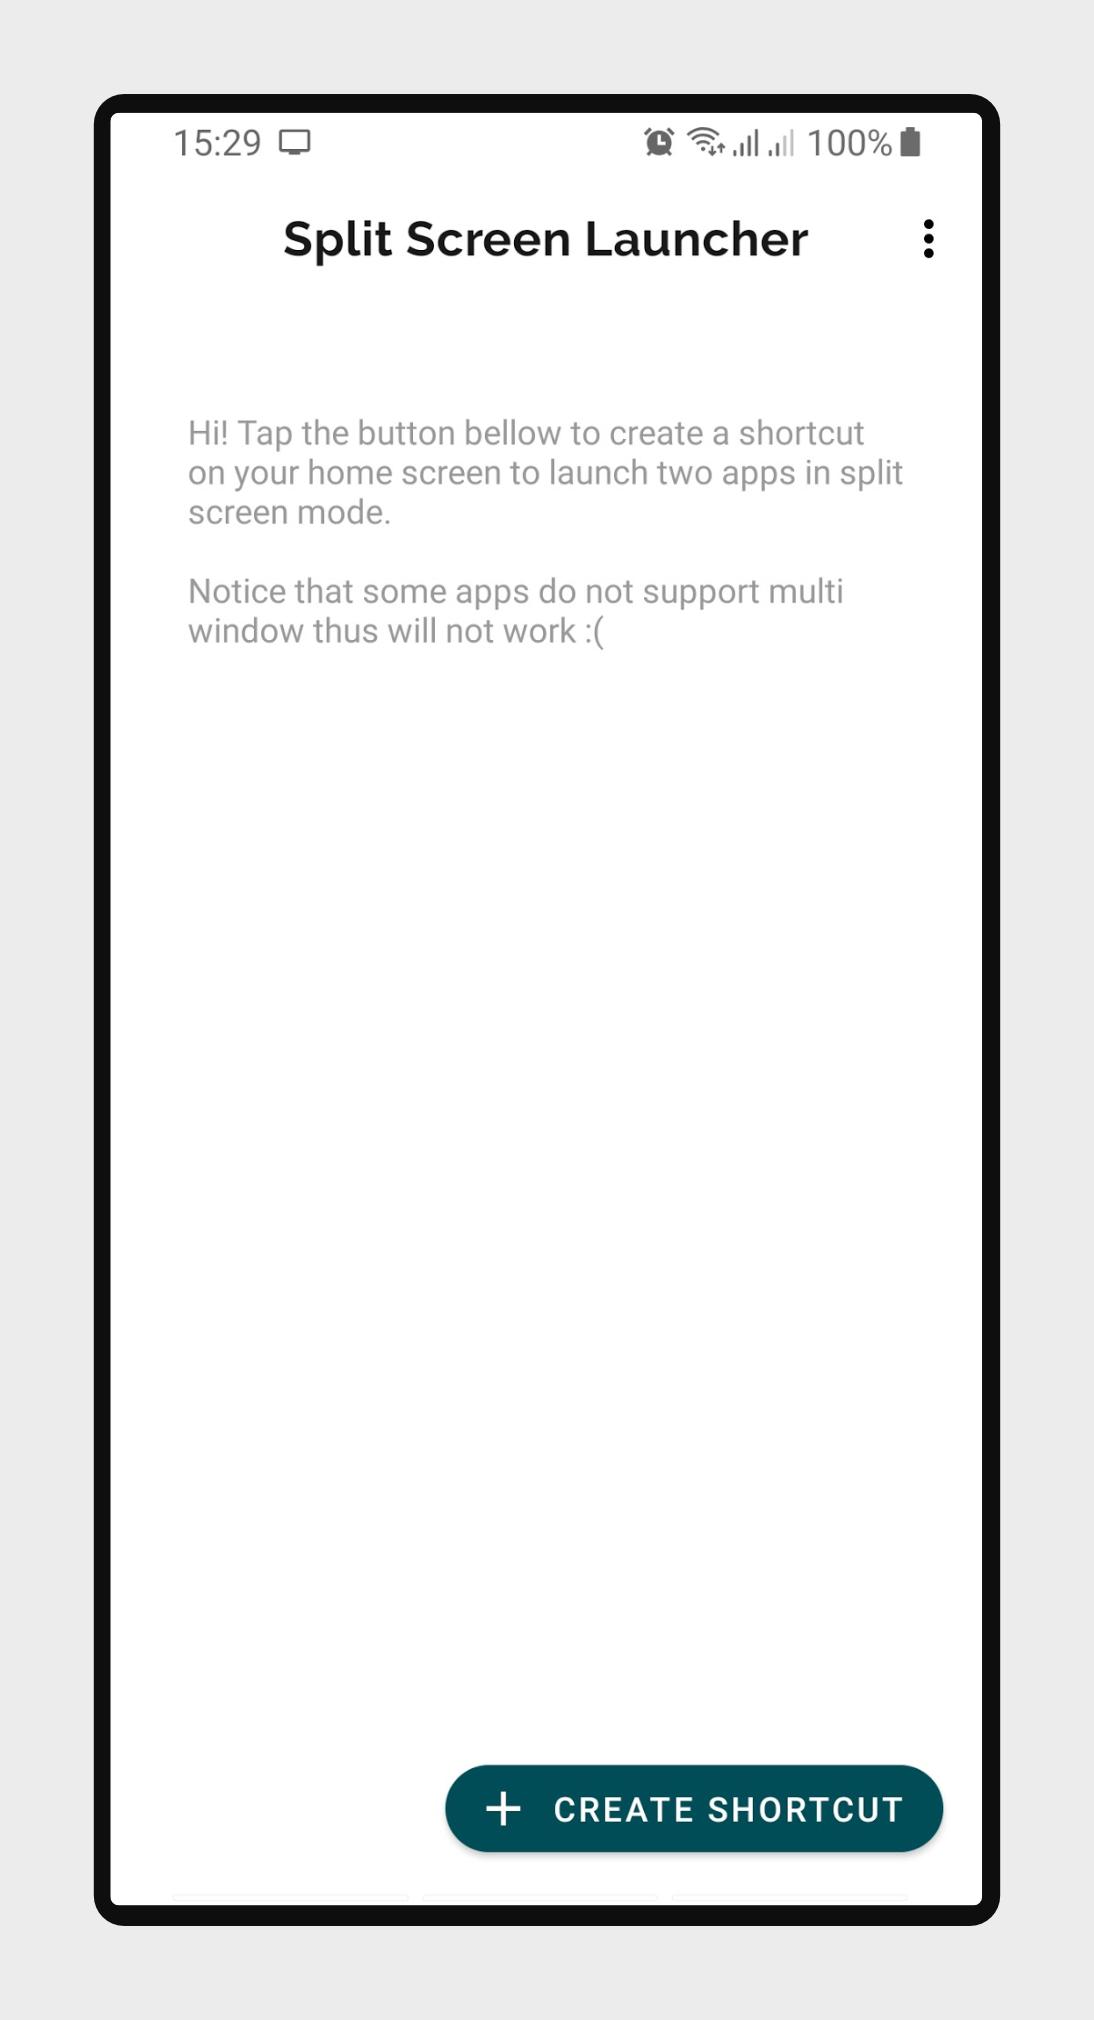 Tải Xuống Apk Split Screen Launcher Cho Android